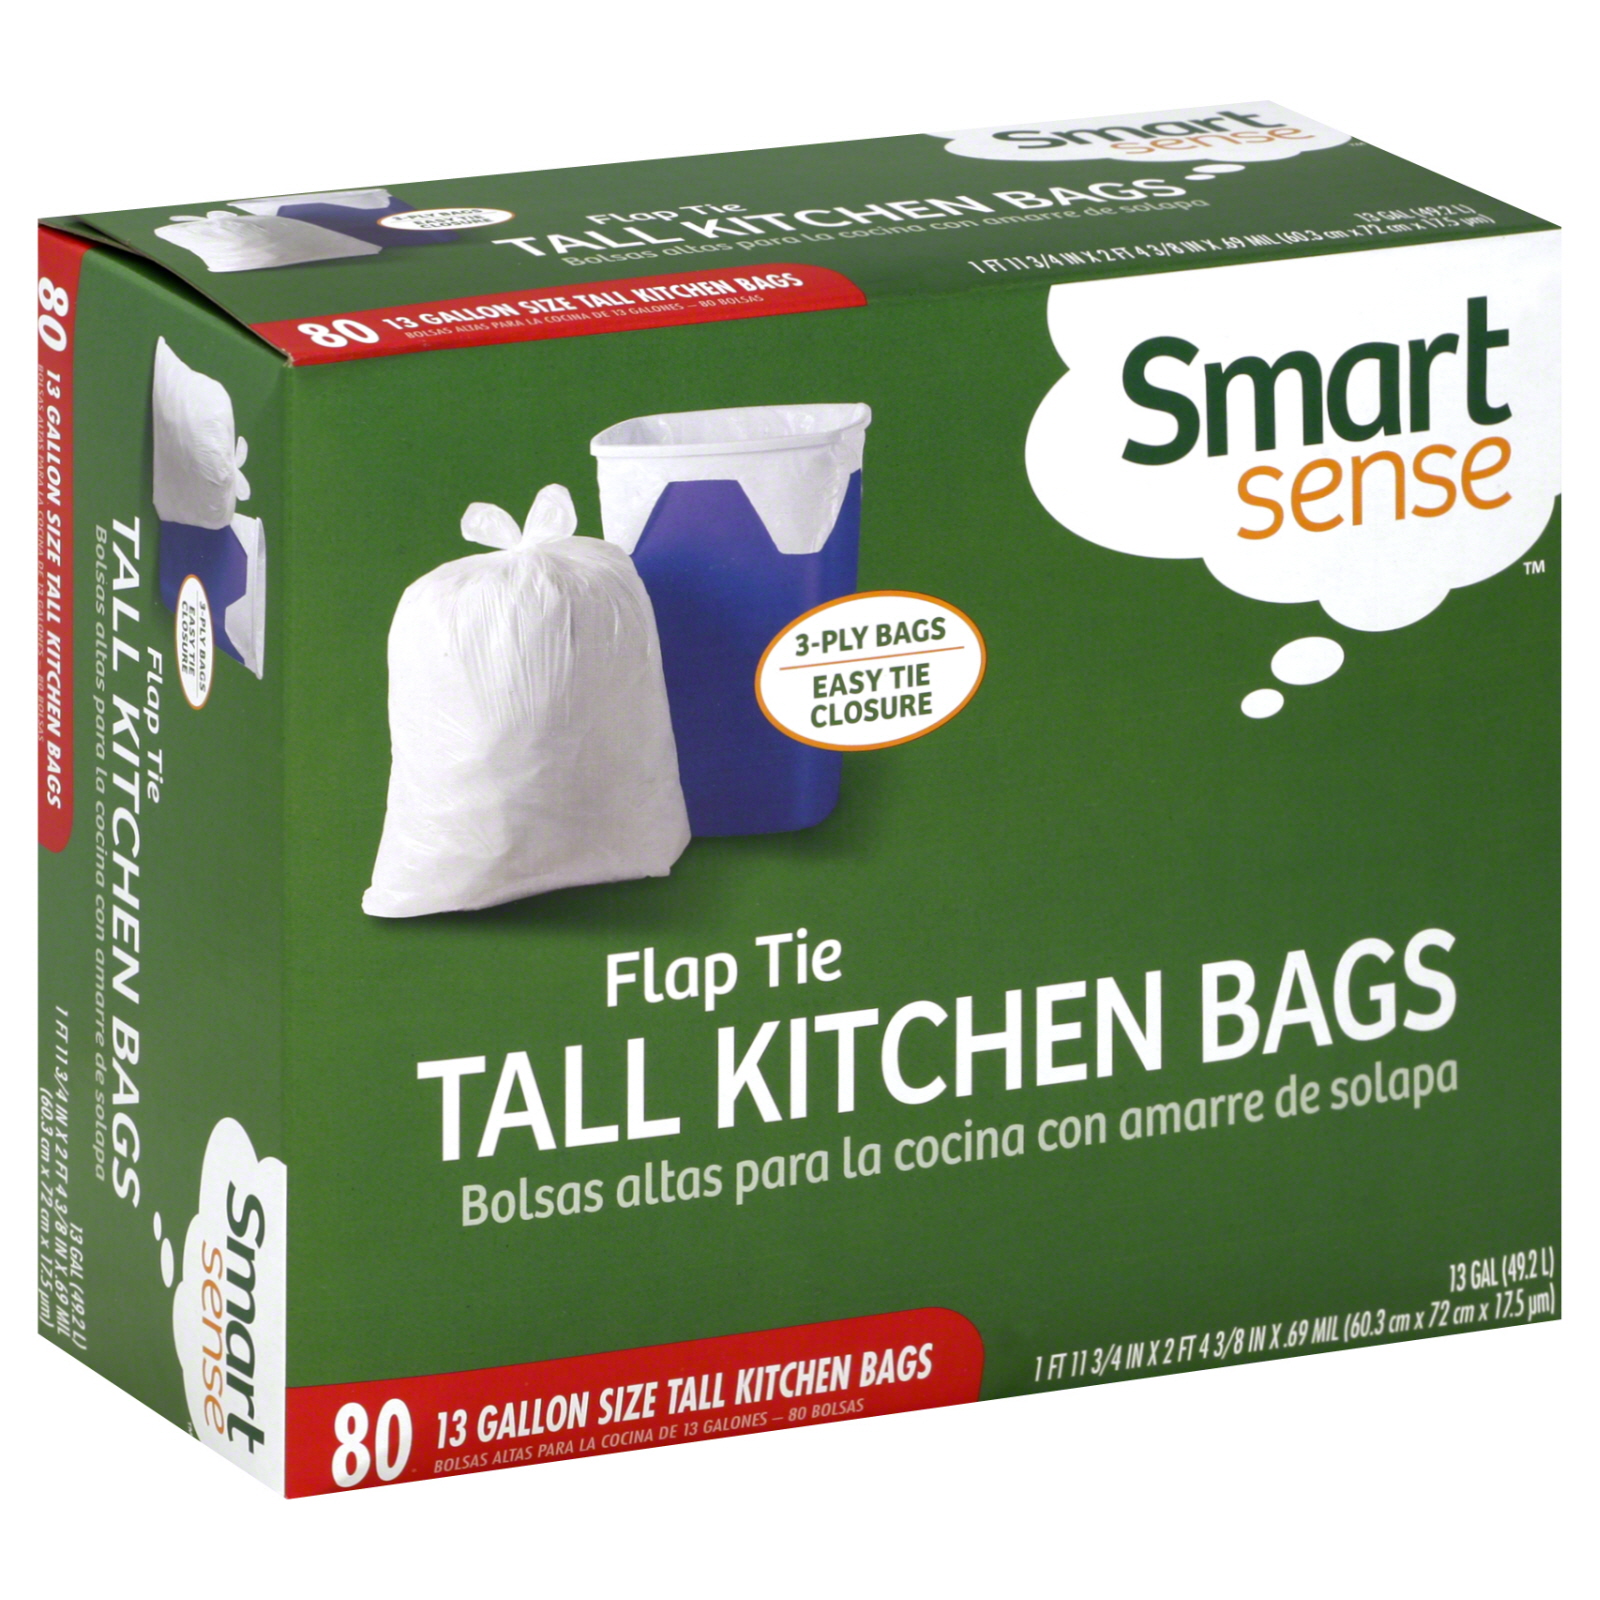 Smart Sense  Tall Kitchen Bags, Flap Tie, 3 Ply, 80 bags